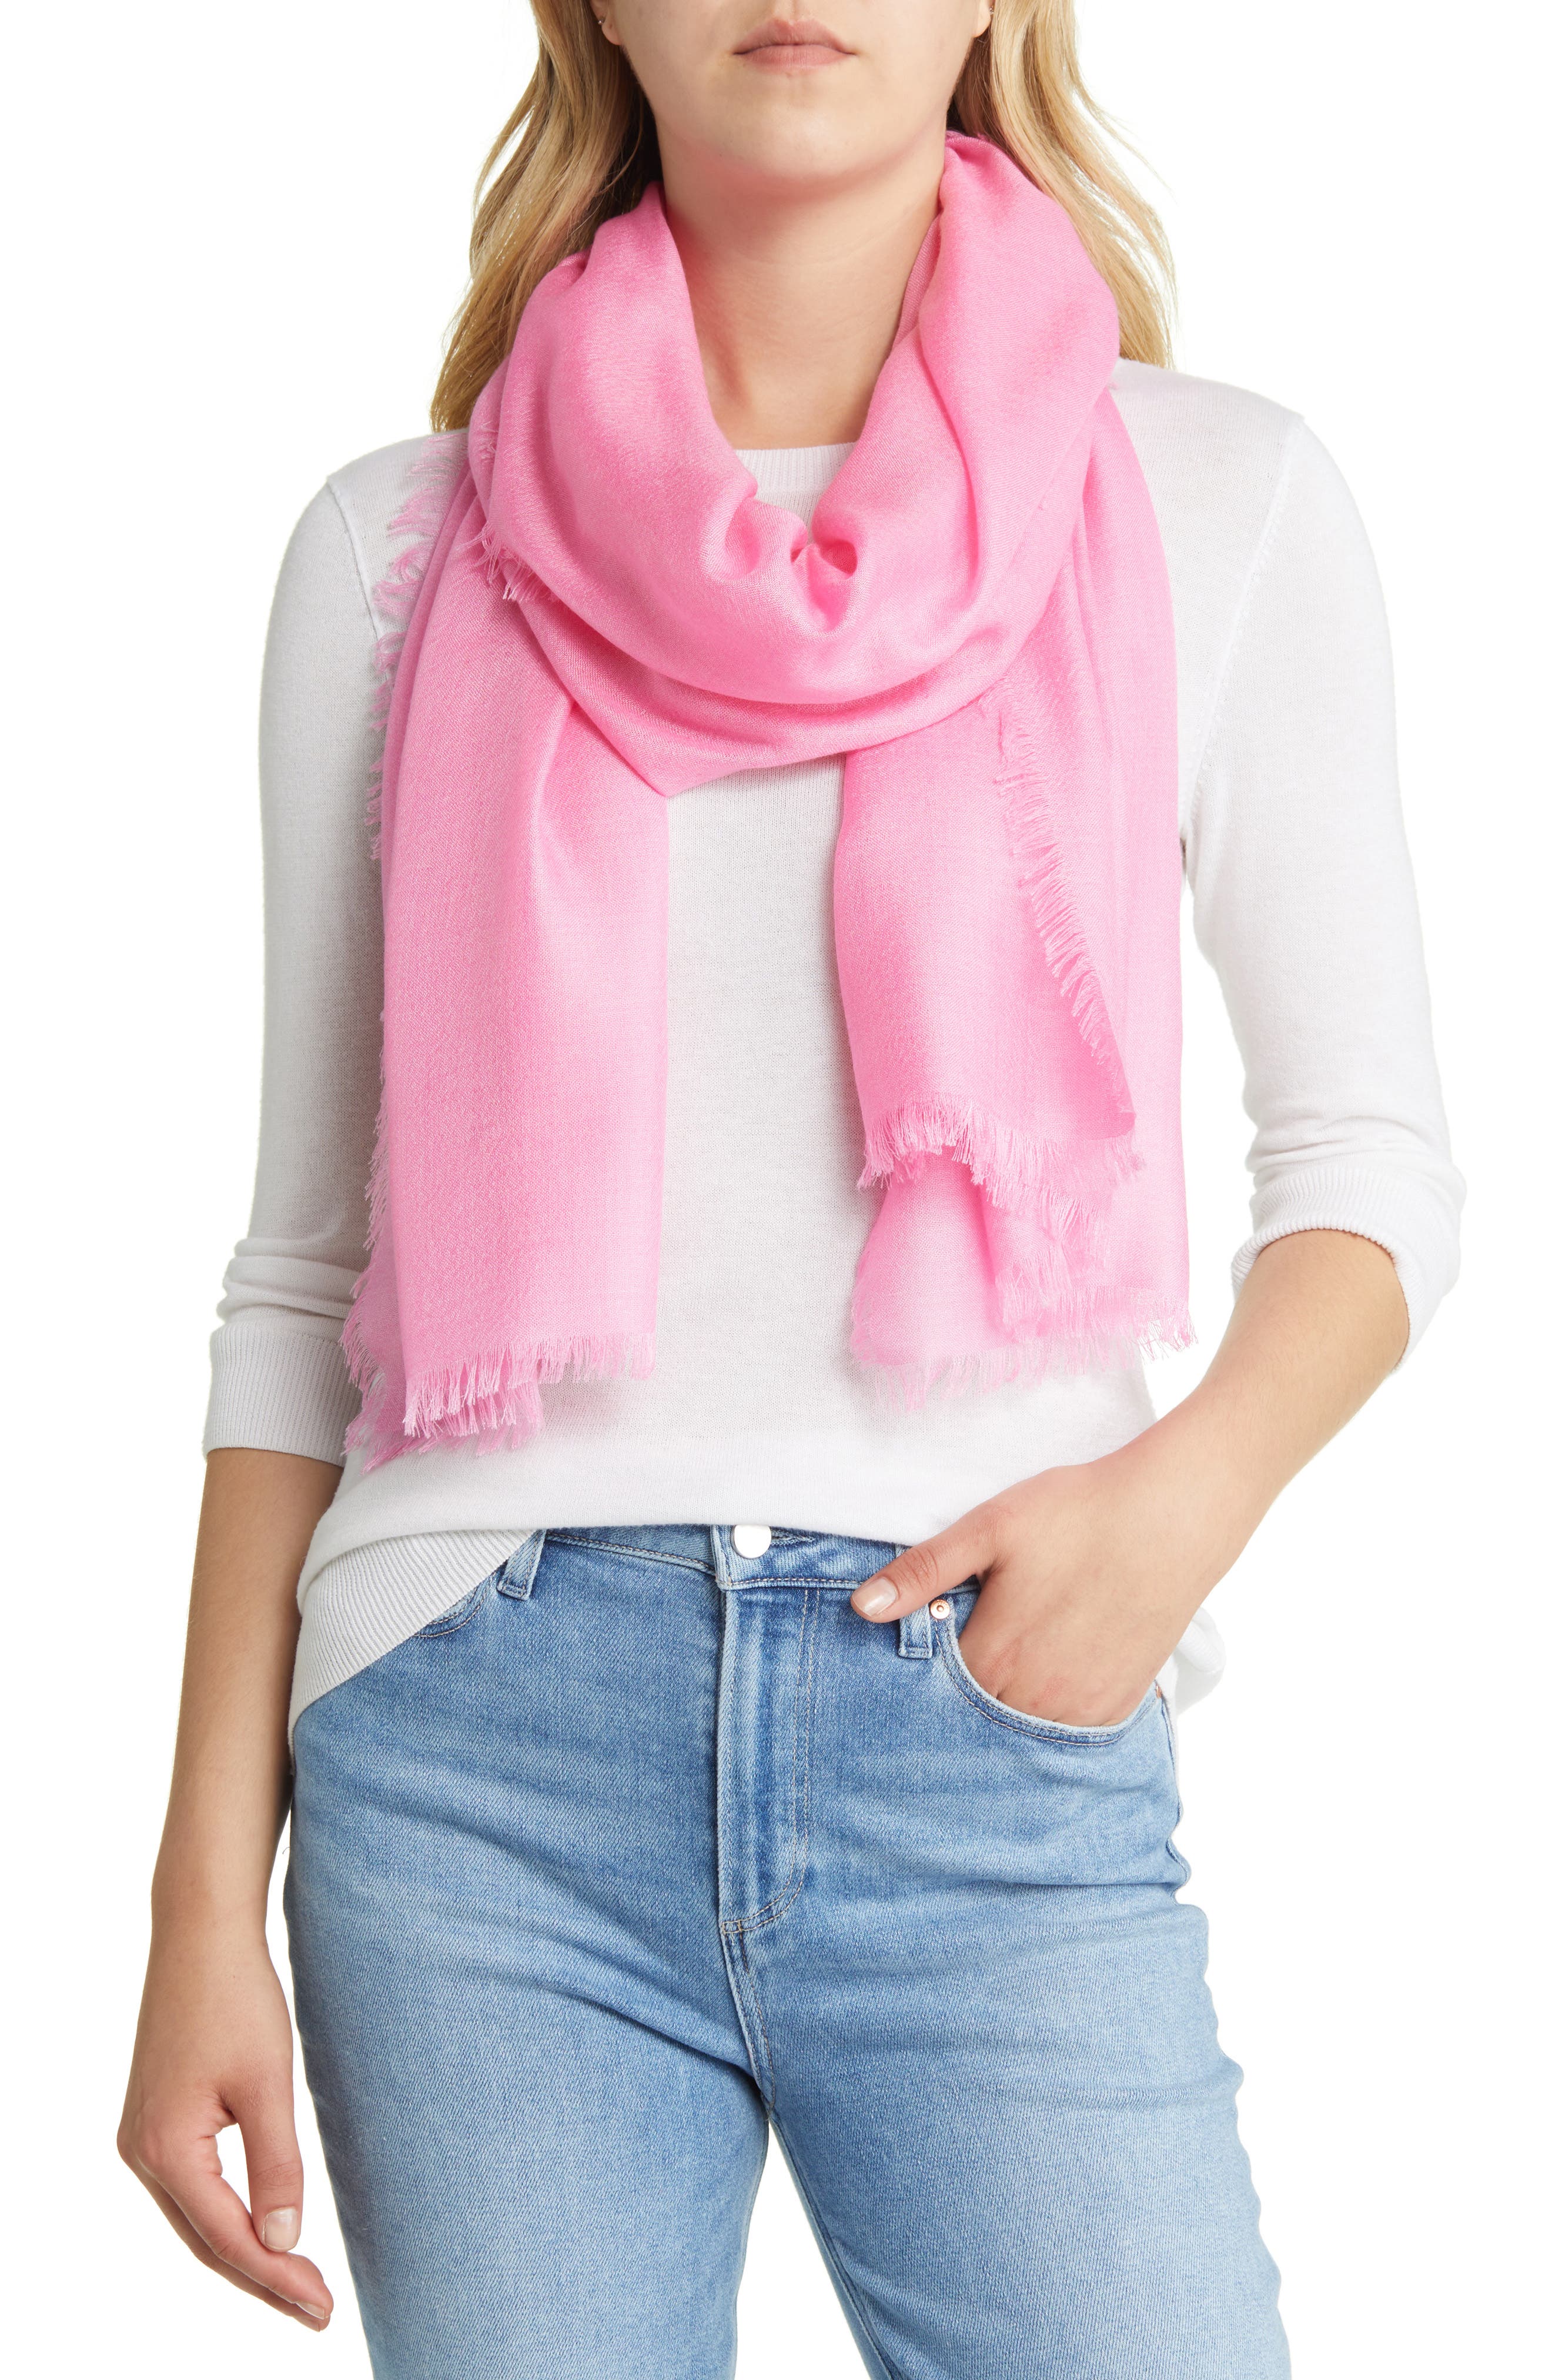 WOMEN FASHION Accessories Shawl Pink Calvin silk shawl discount 67% Pink Single 